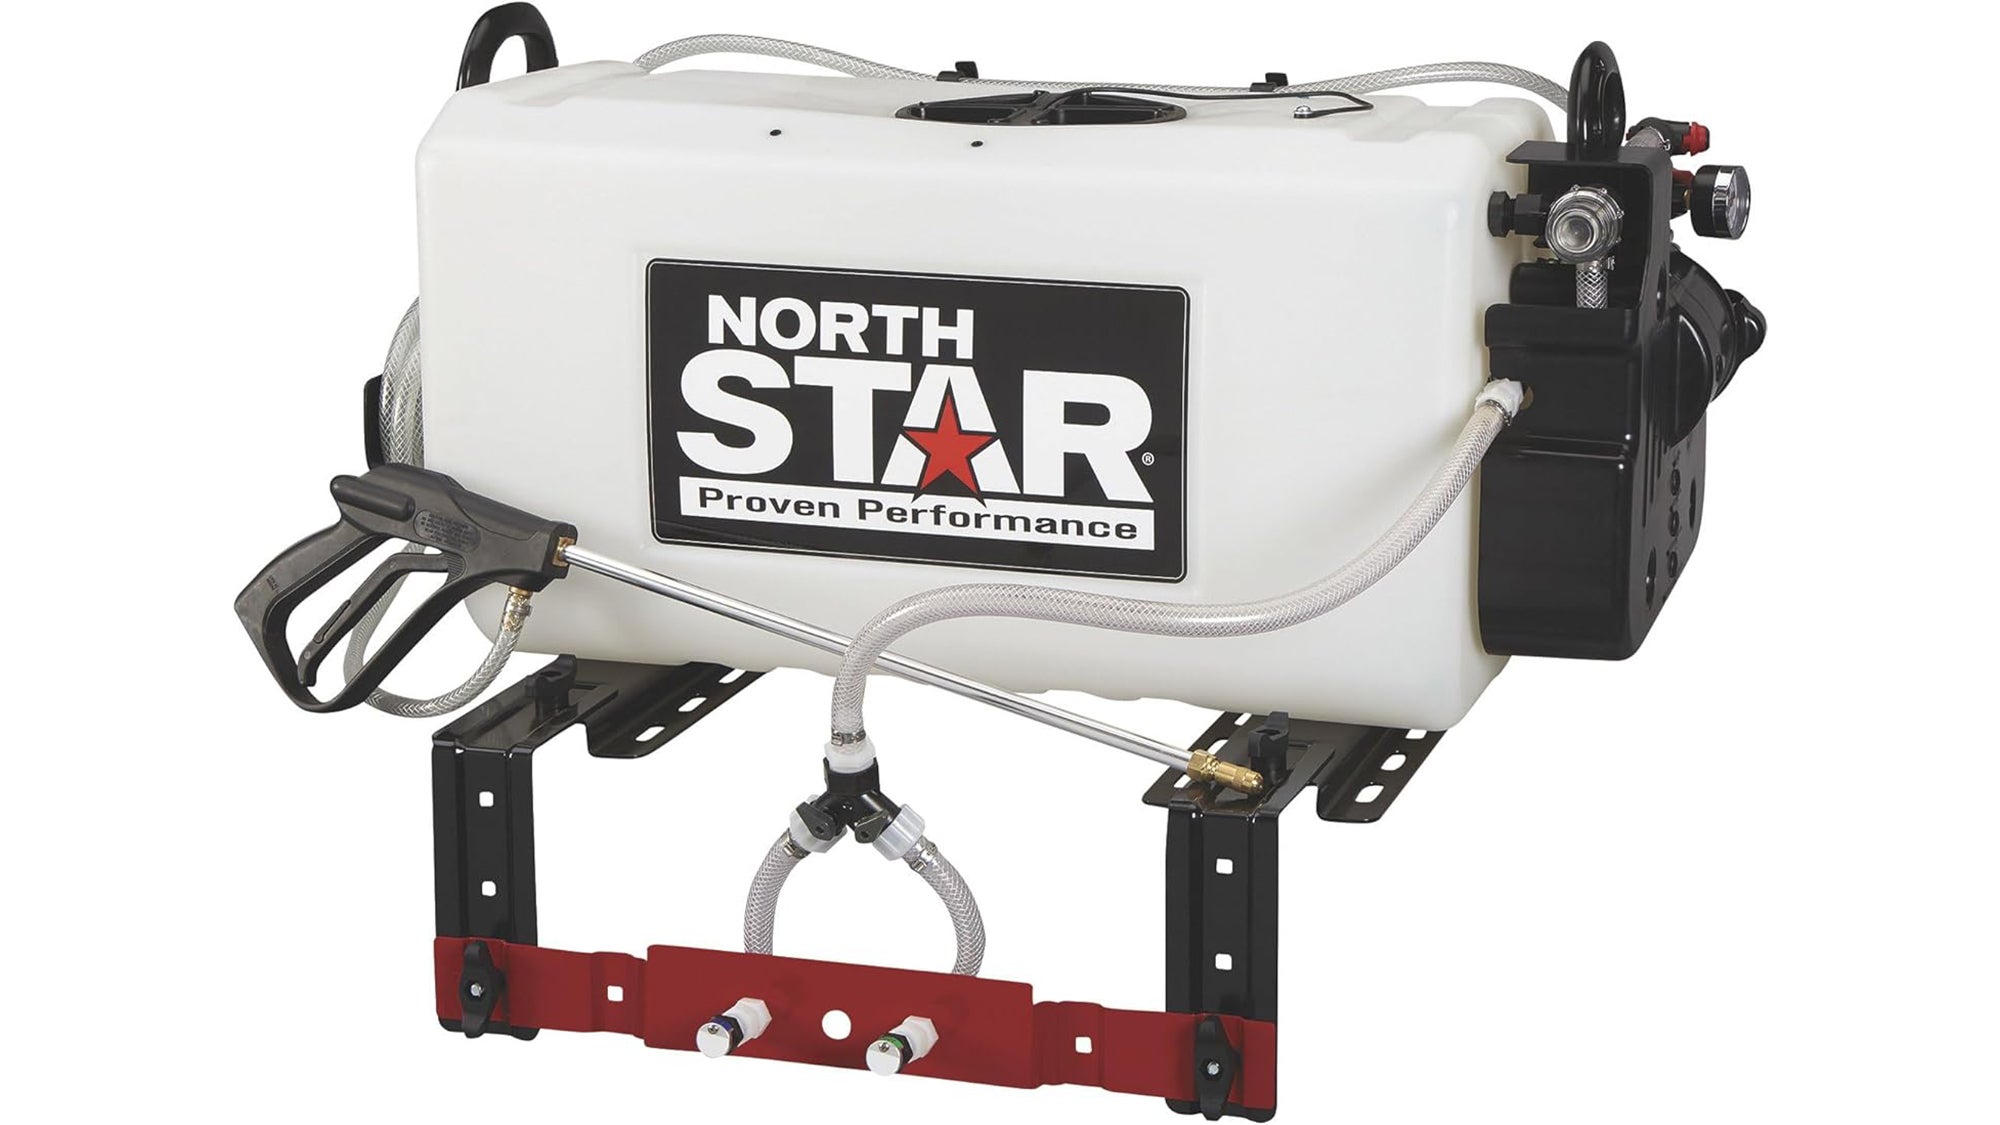 NorthStat ATV mounted sprayer on white background.